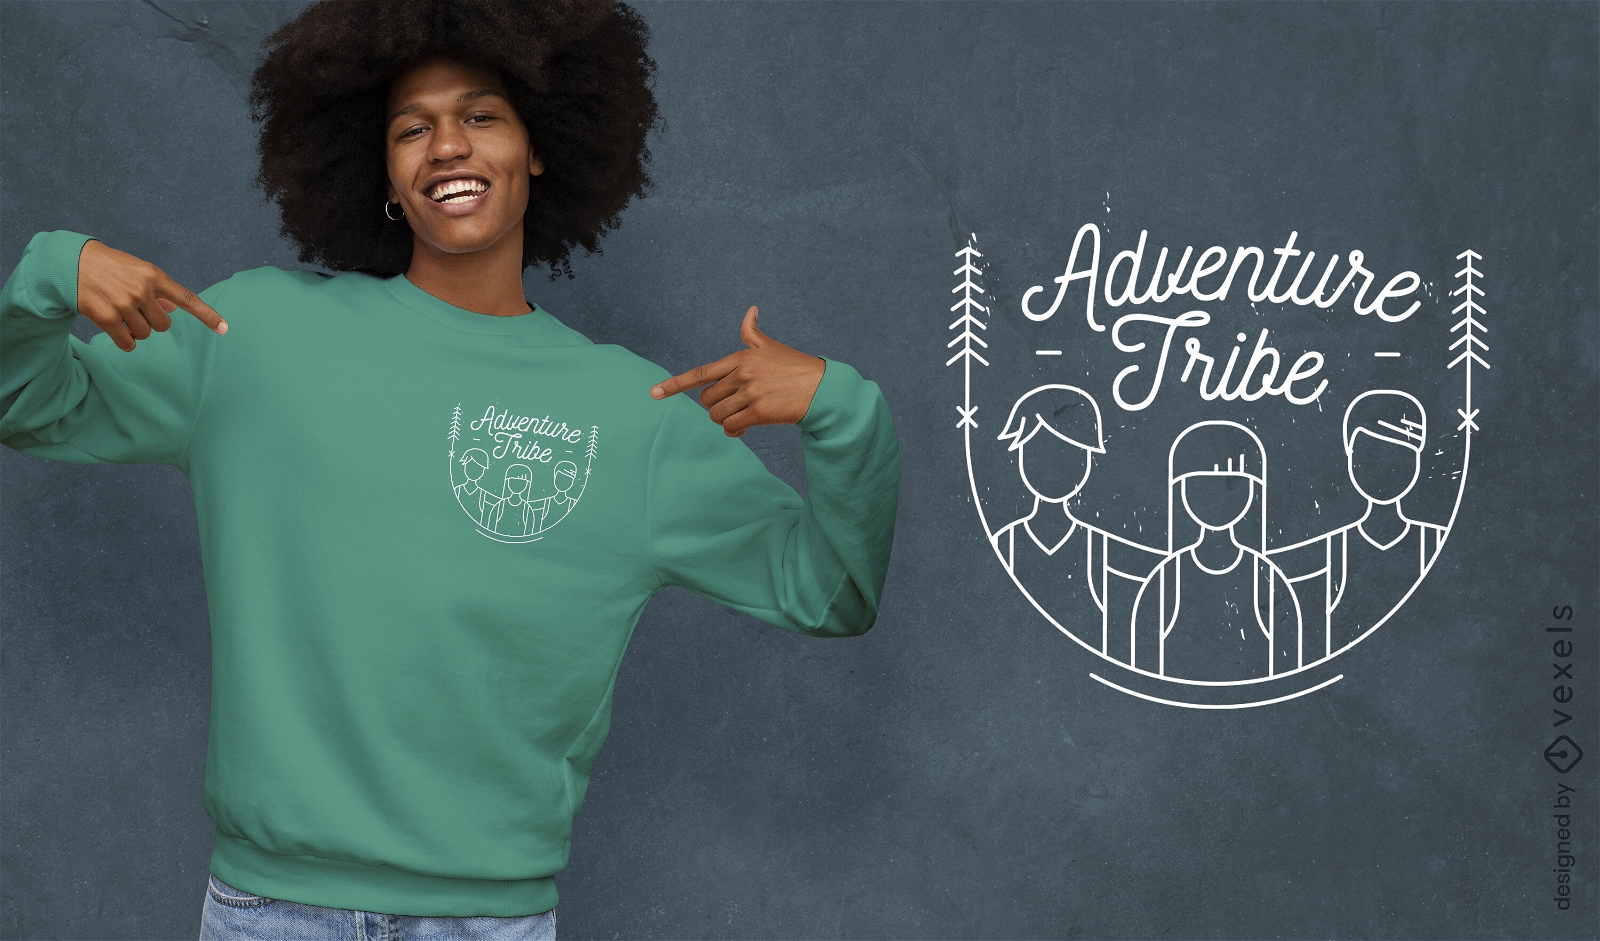 Adventure tribe travel t-shirt design